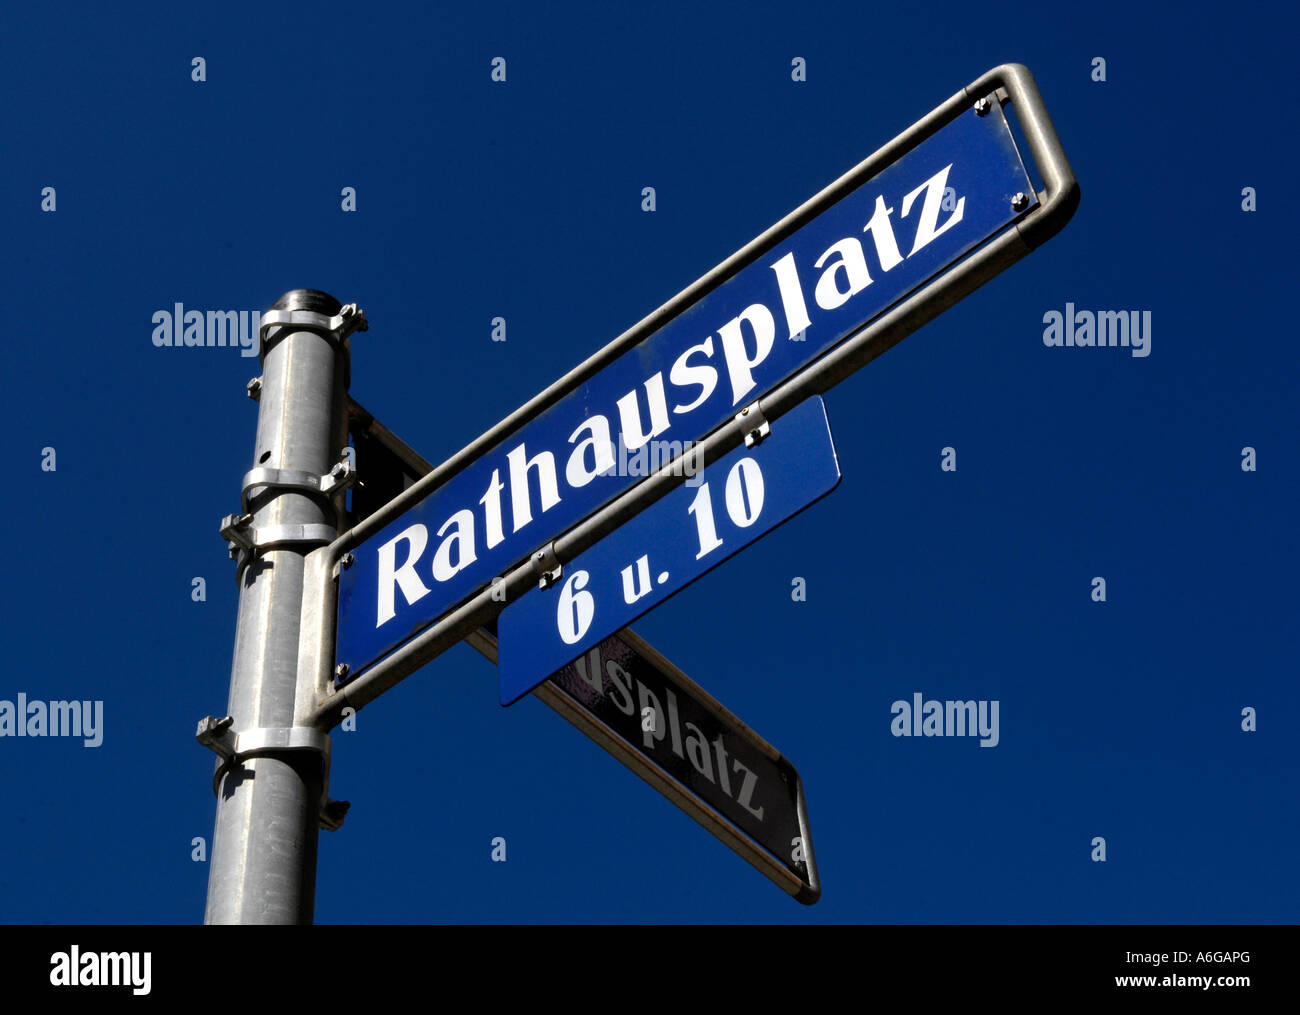 Road sign Rathausplatz (town hall) Stock Photo